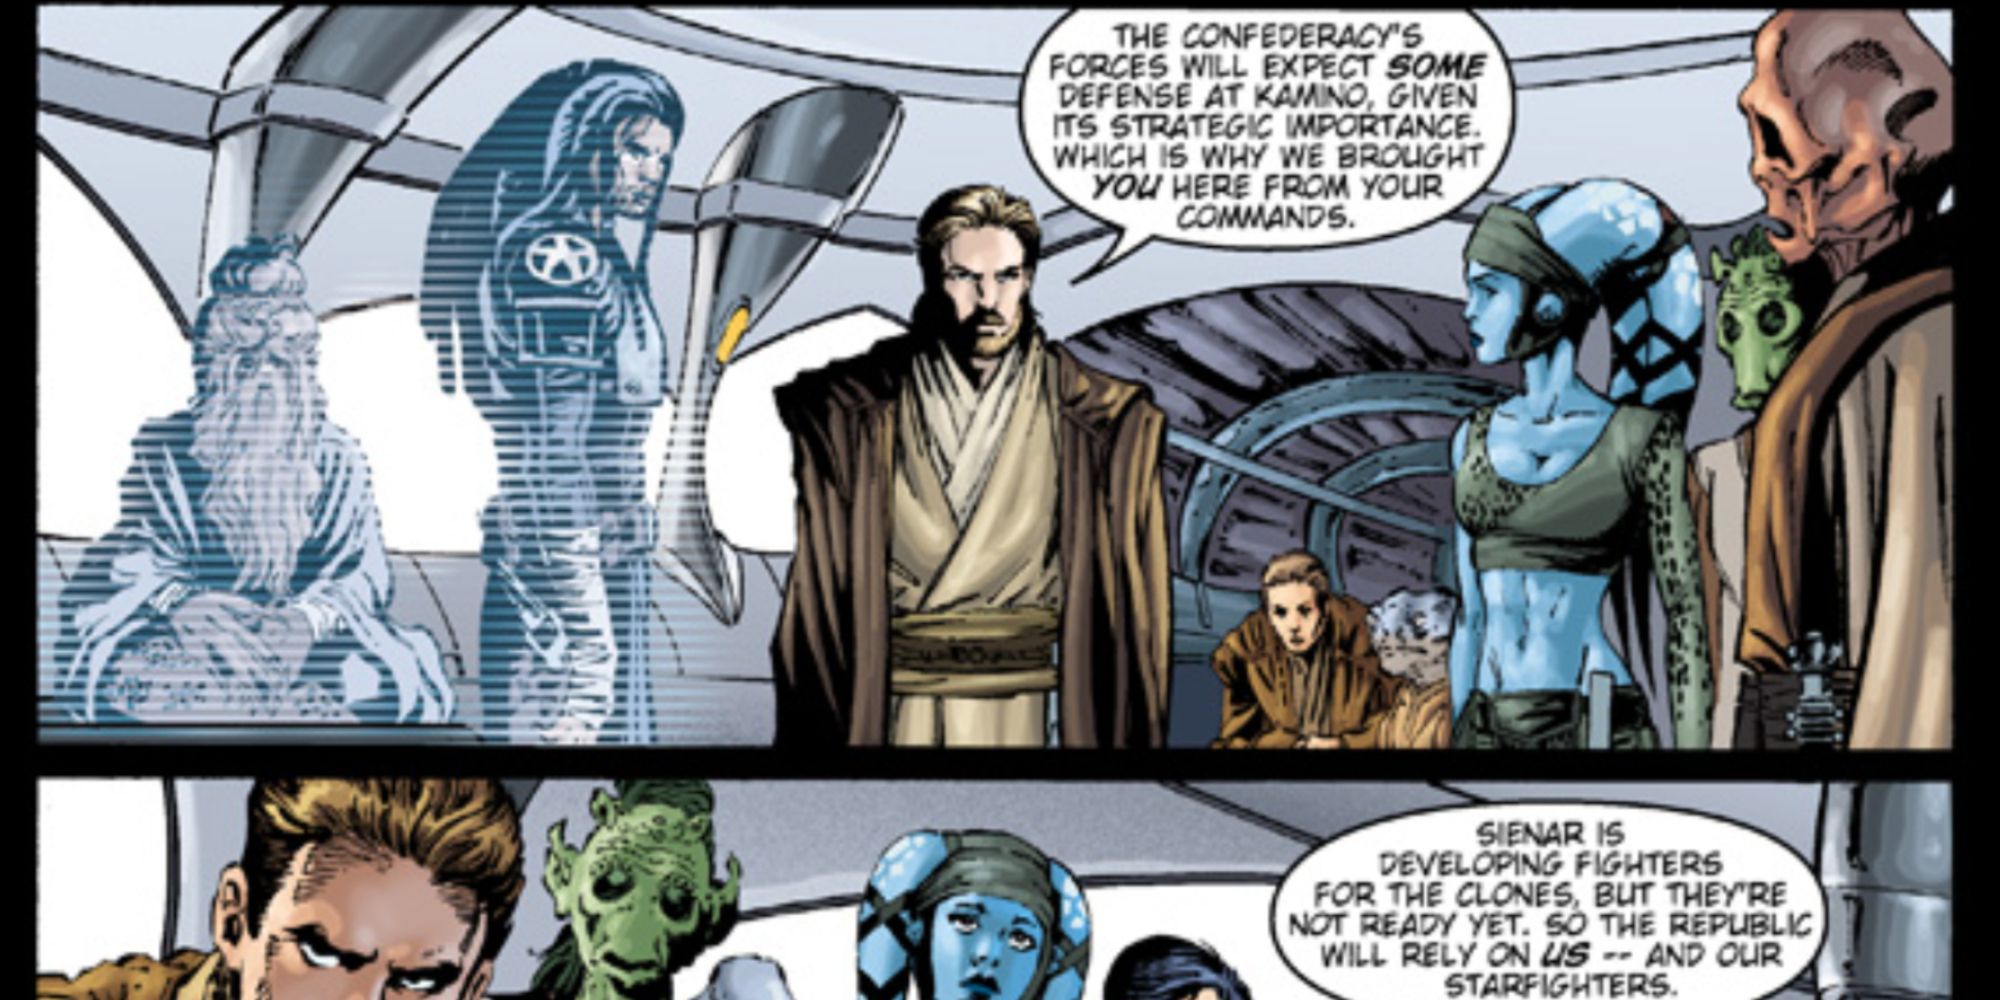 Obi-Wan gives orders to Jedi In Star Wars comics.